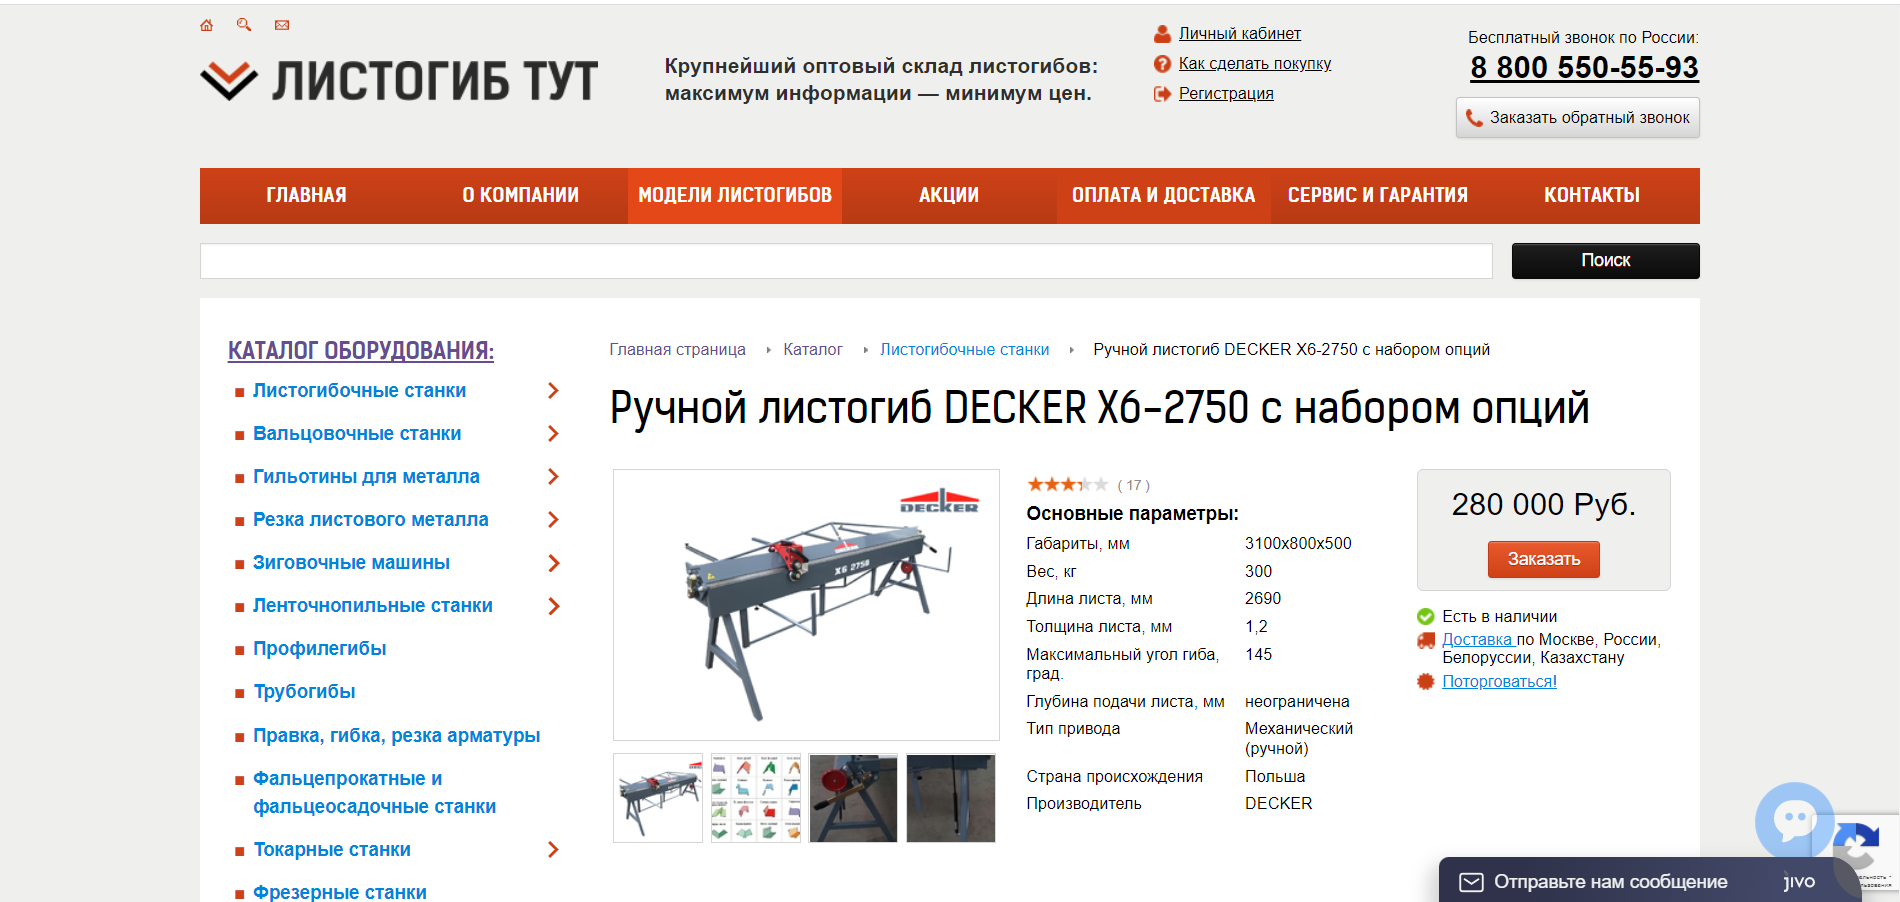 Ручной листогиб DECKER X6-2750 с набором опций